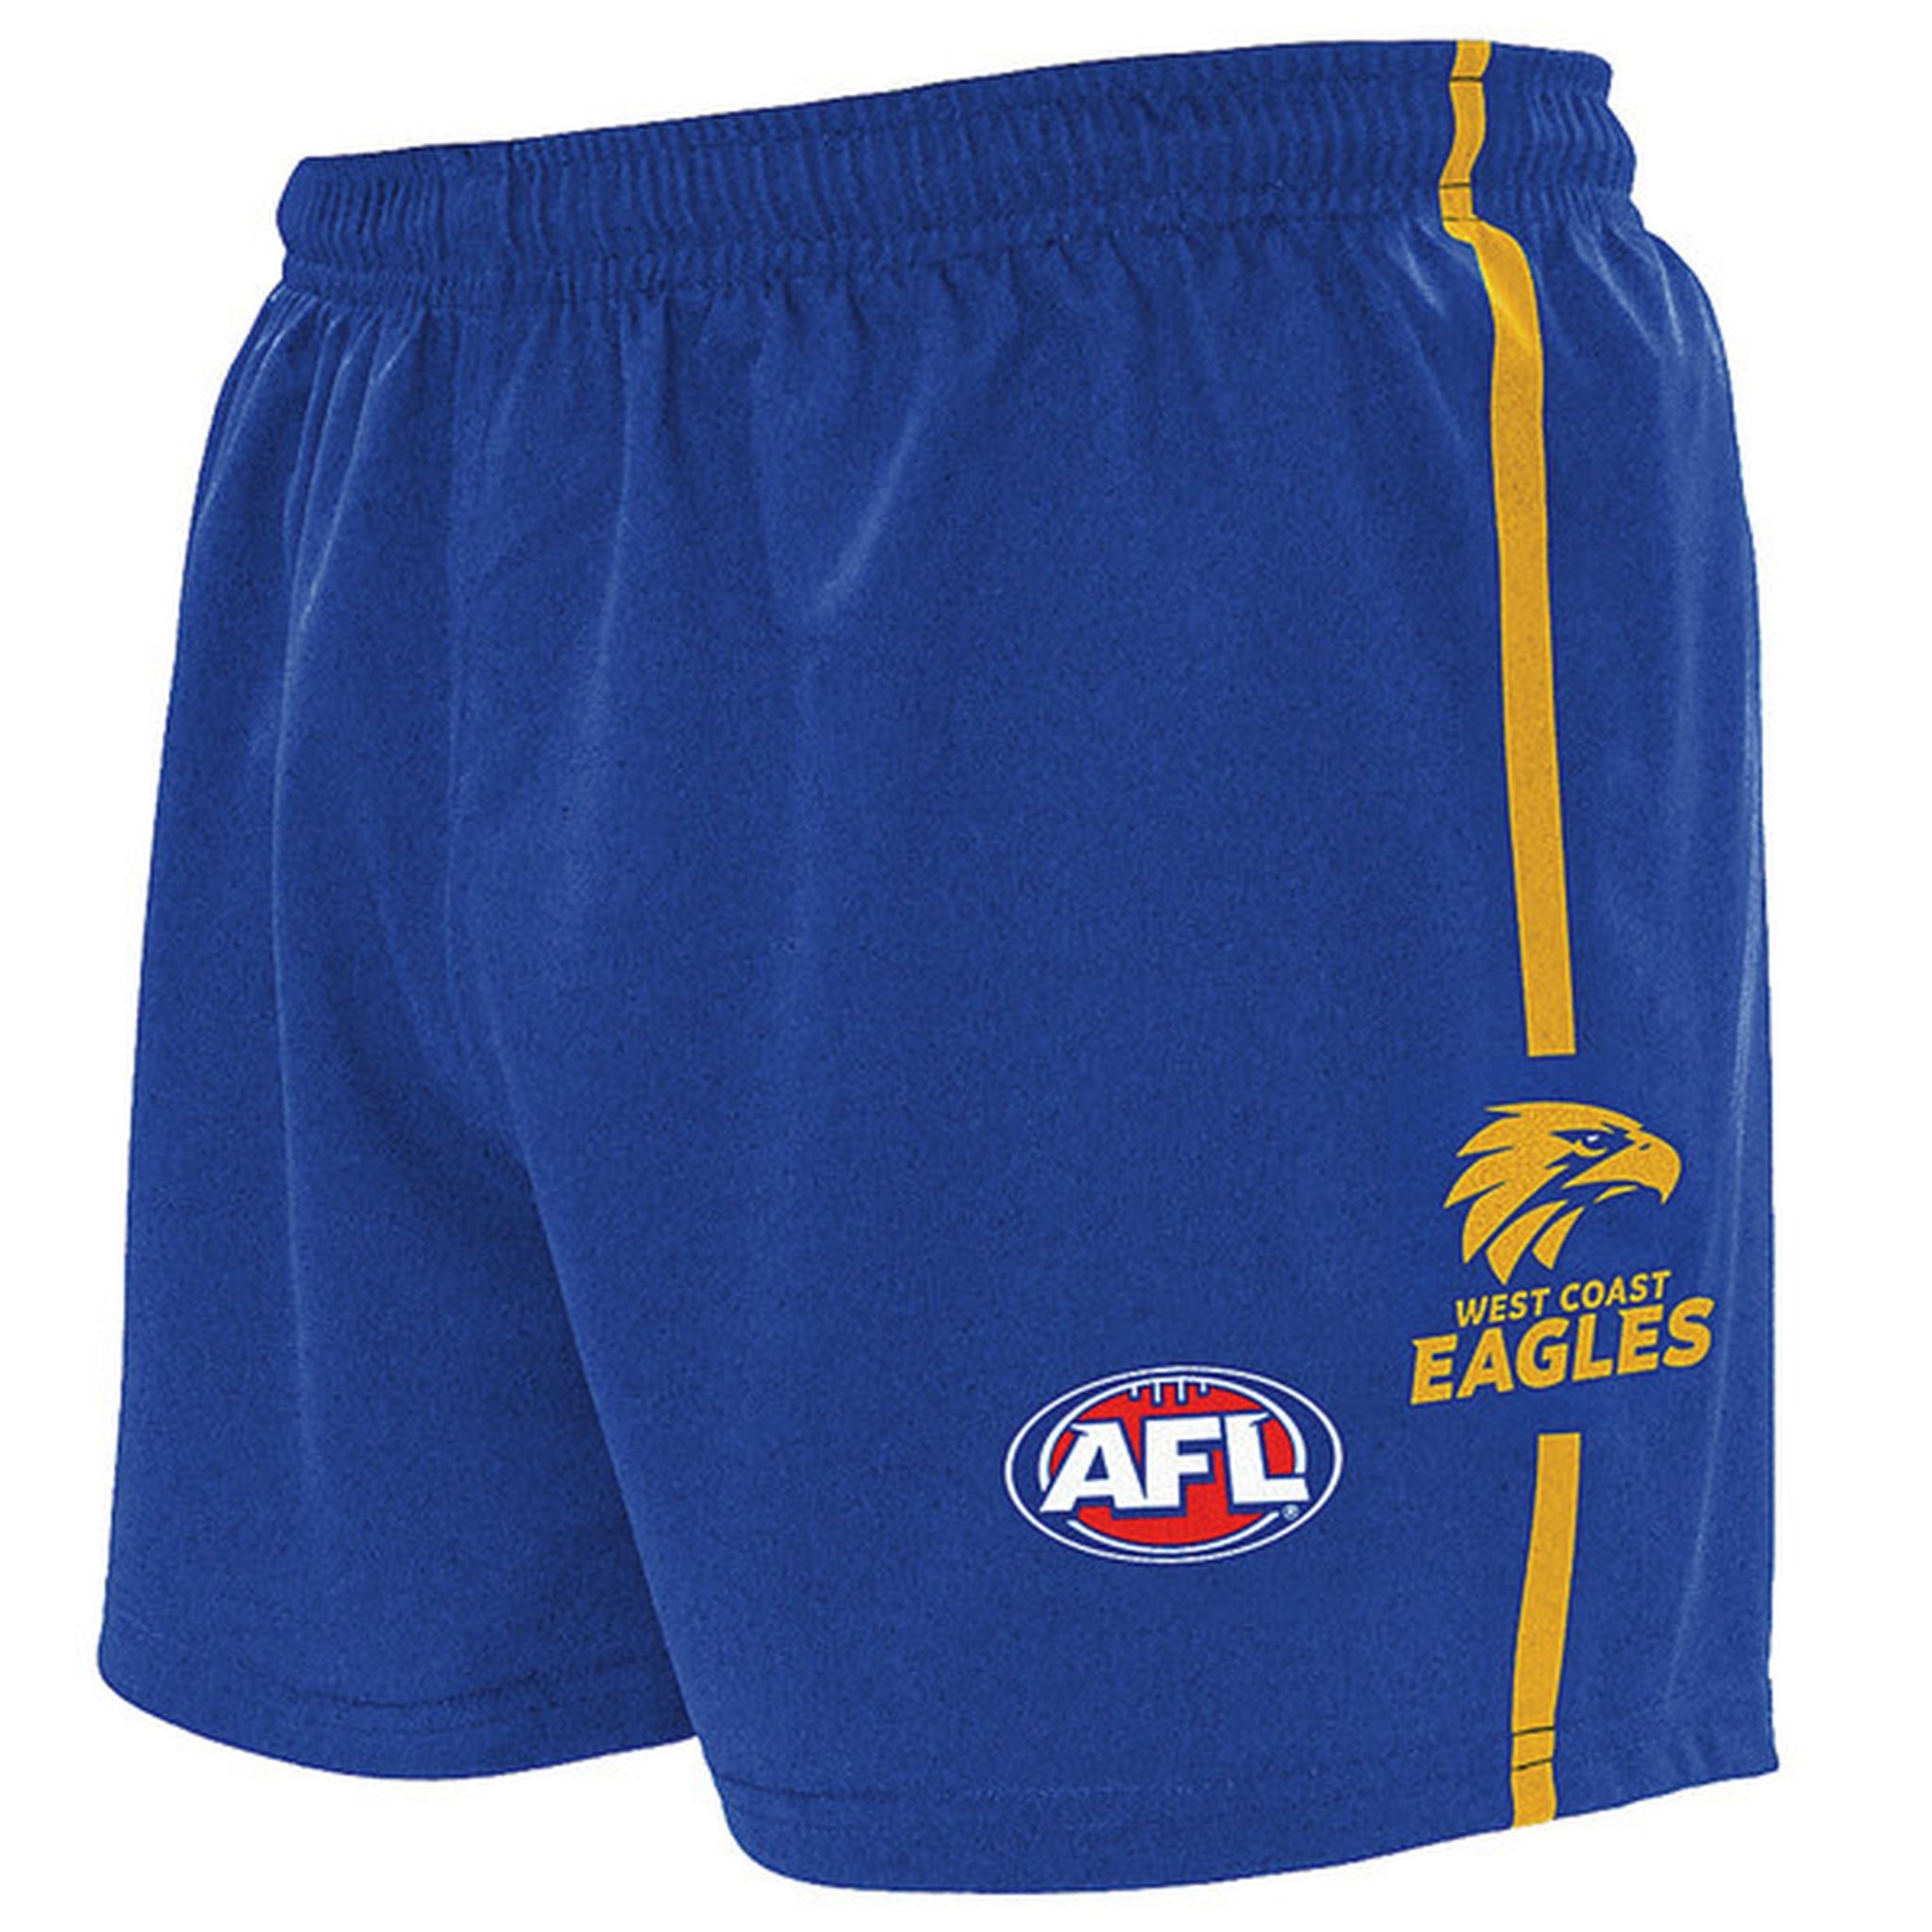 Burley West Coast Eagles AFL Replica Kids Shorts